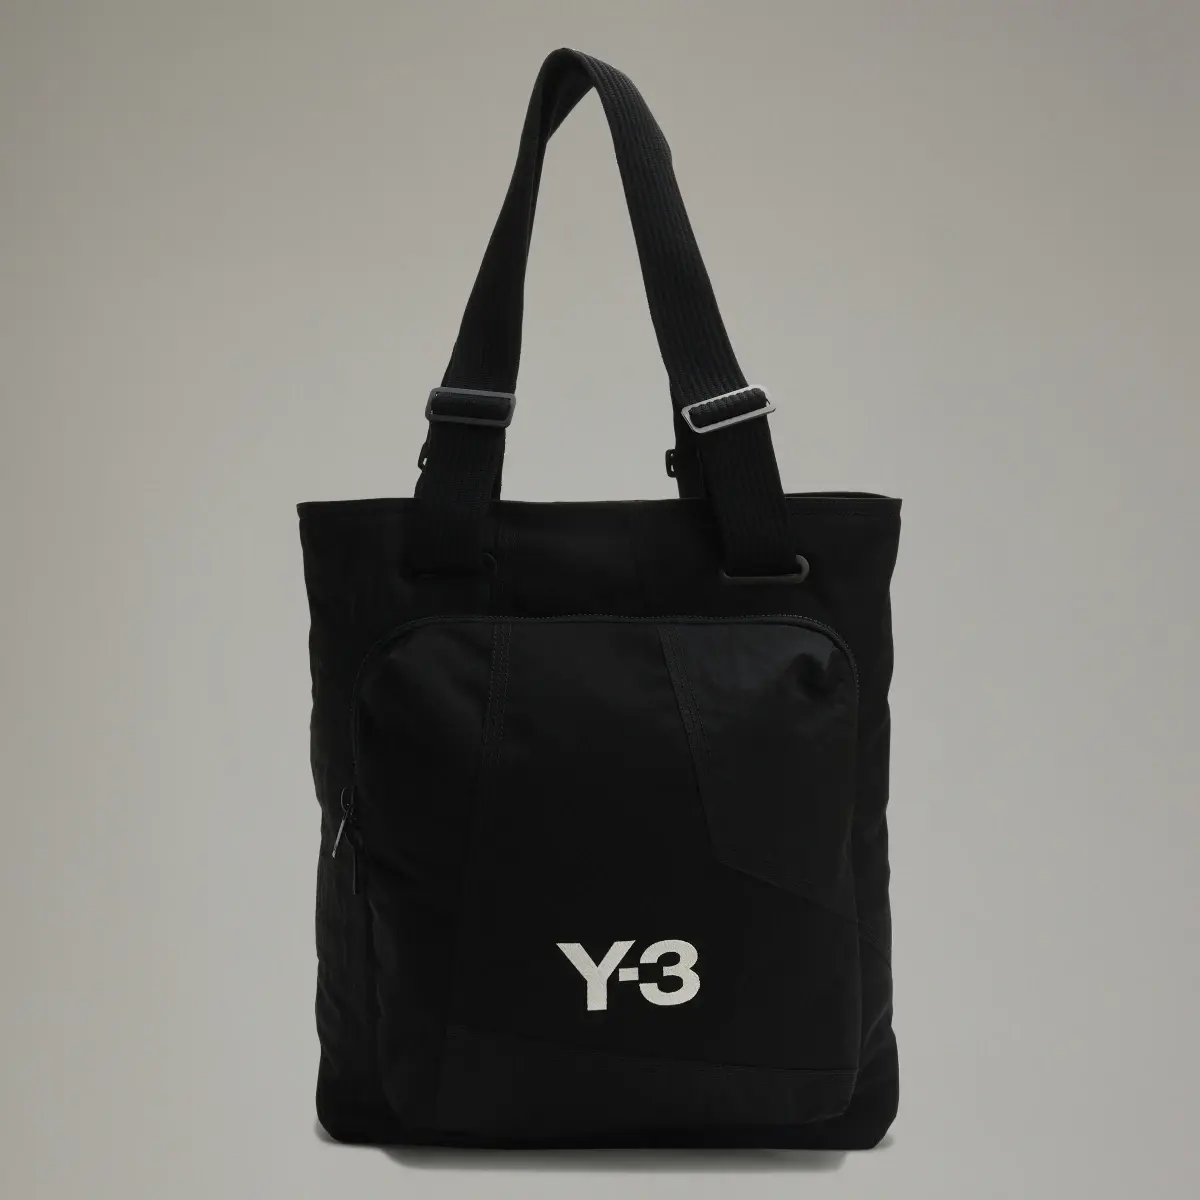 Adidas Y-3 Classic Tote Bag. 2